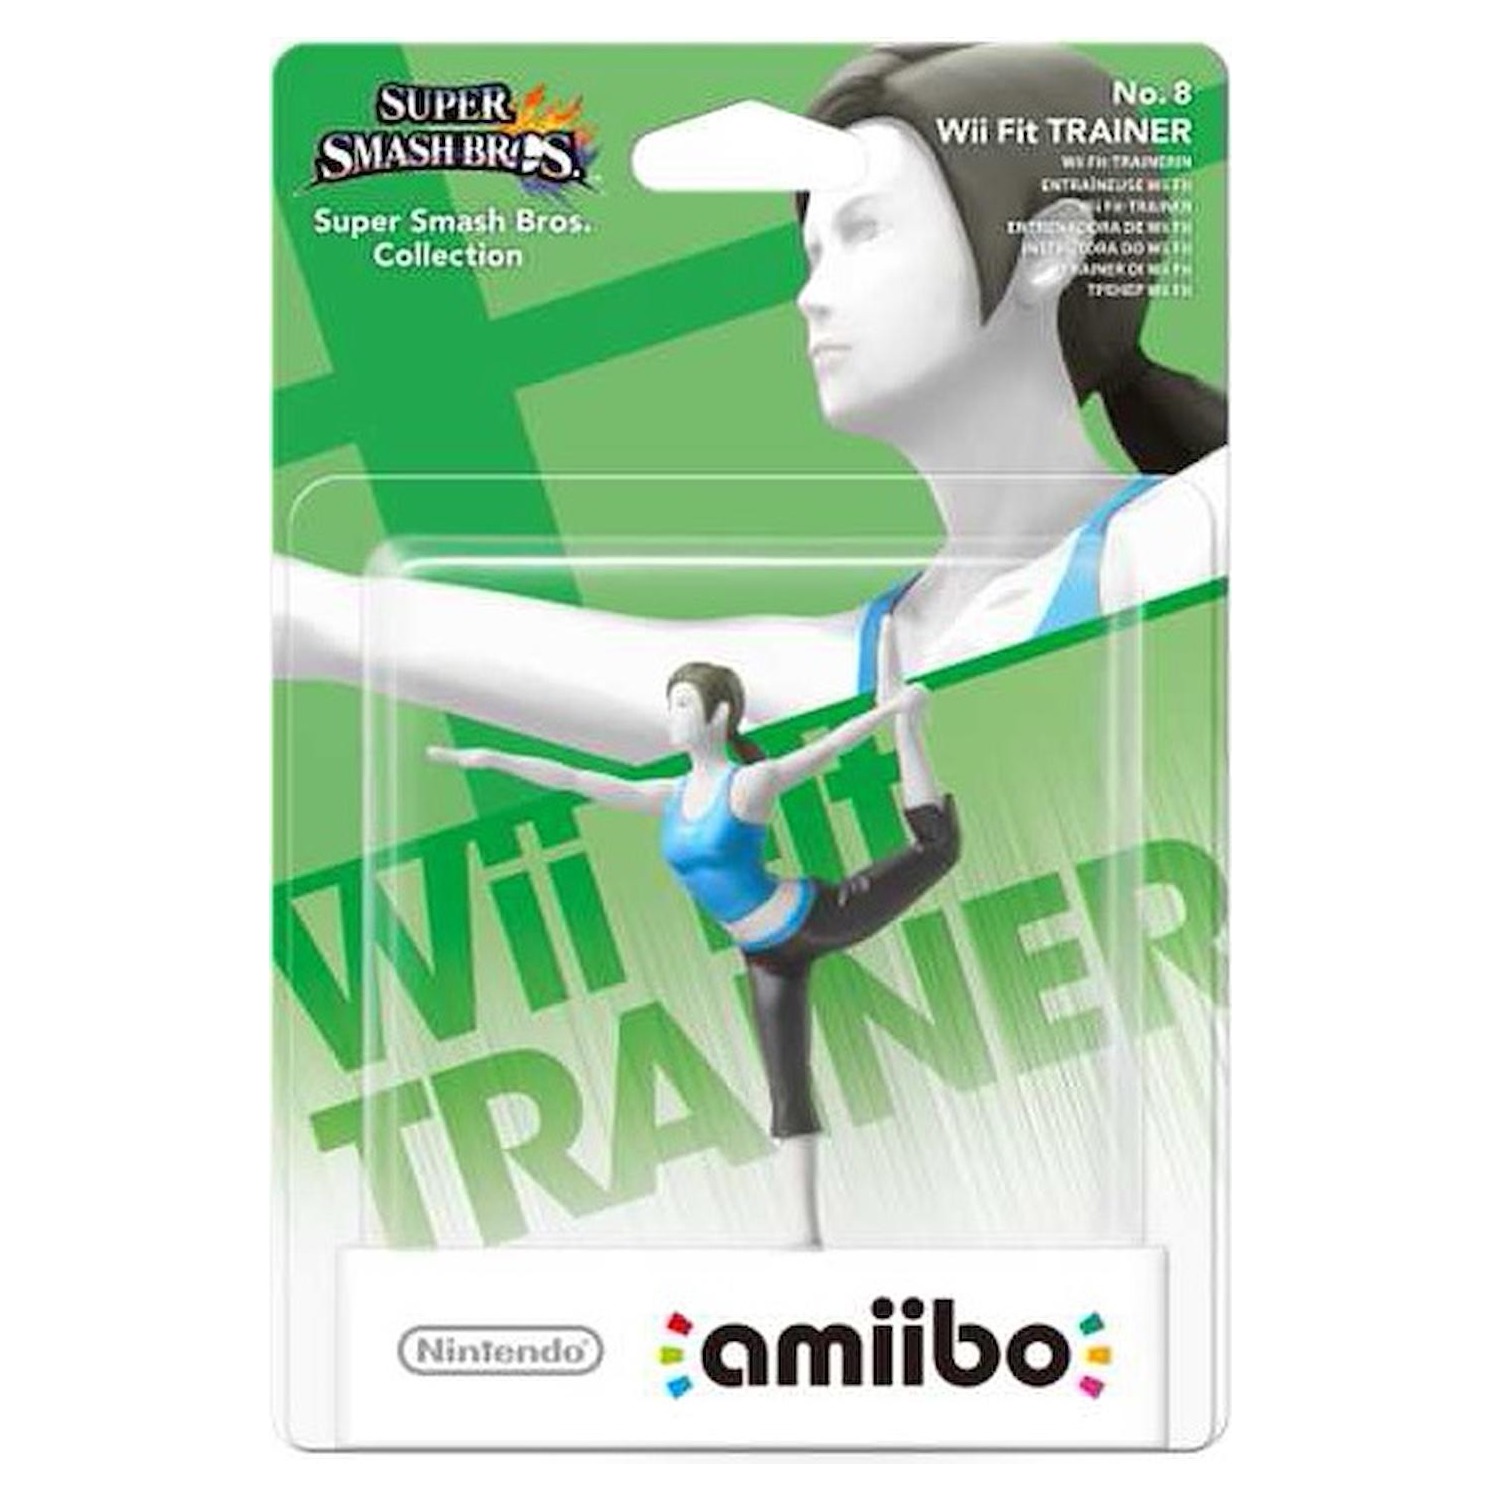 Immagine per Nintendo Amiibo Fit Ttrainer da DIMOStore